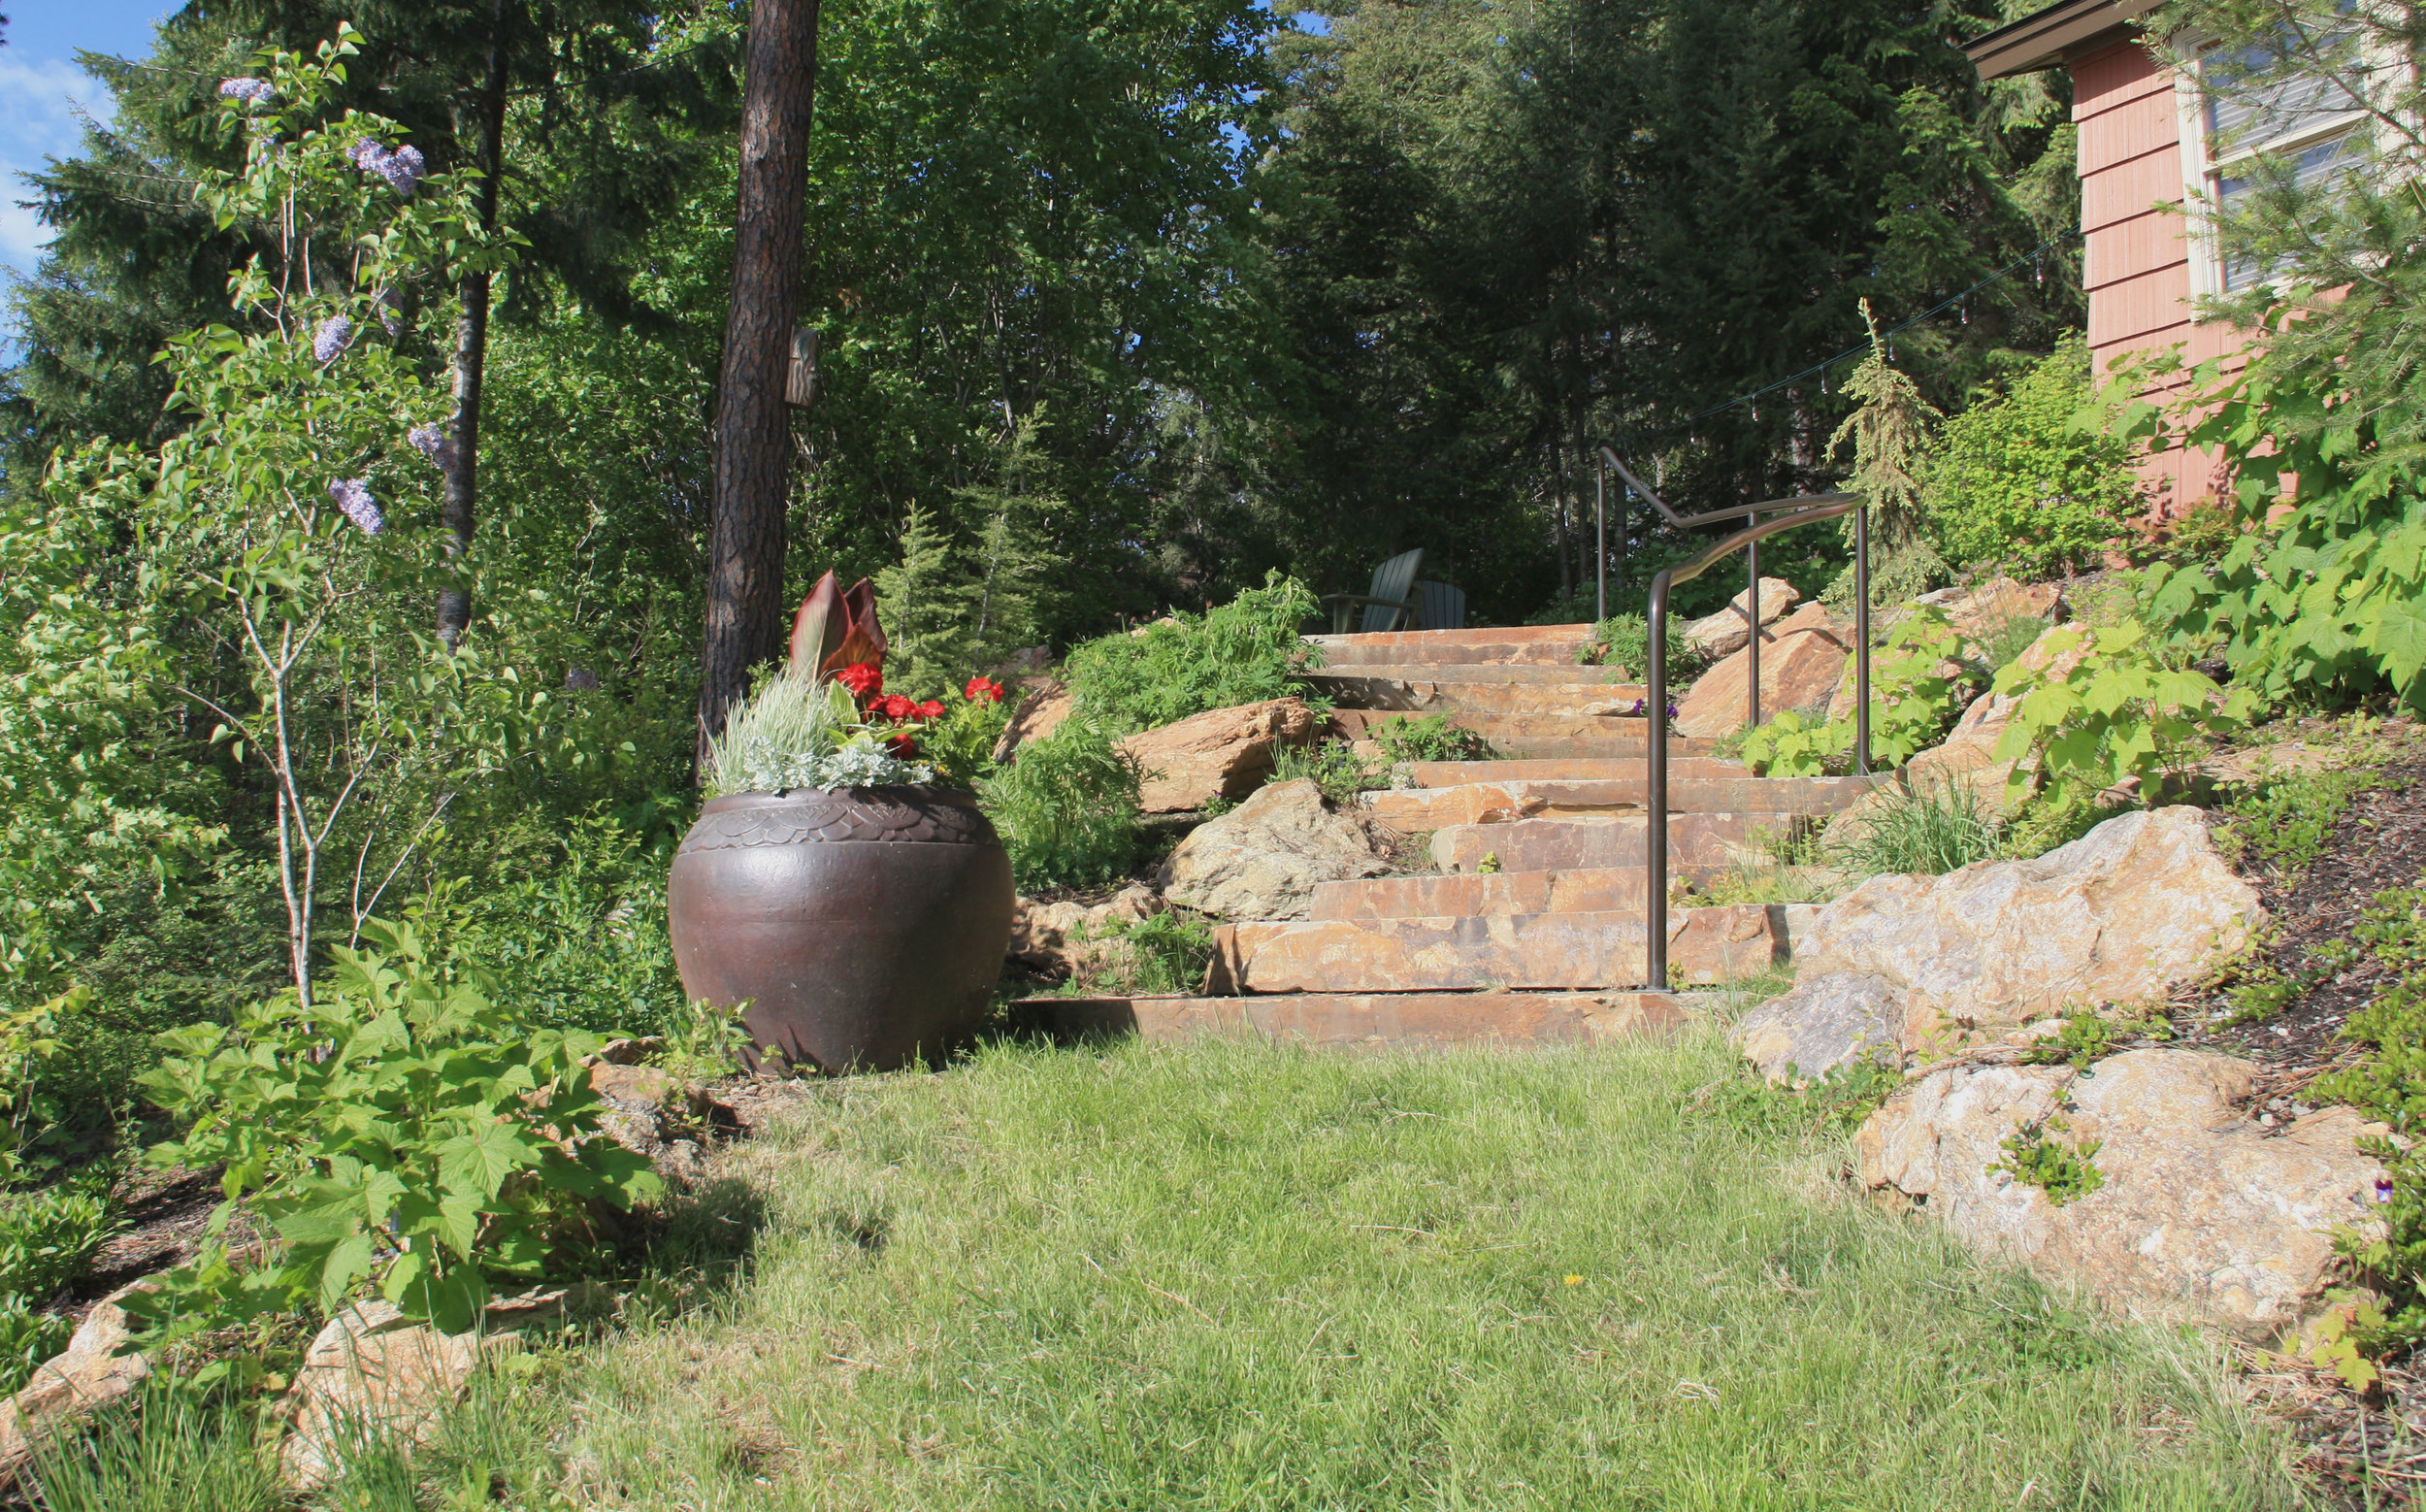 kootenai county lake access landscaping